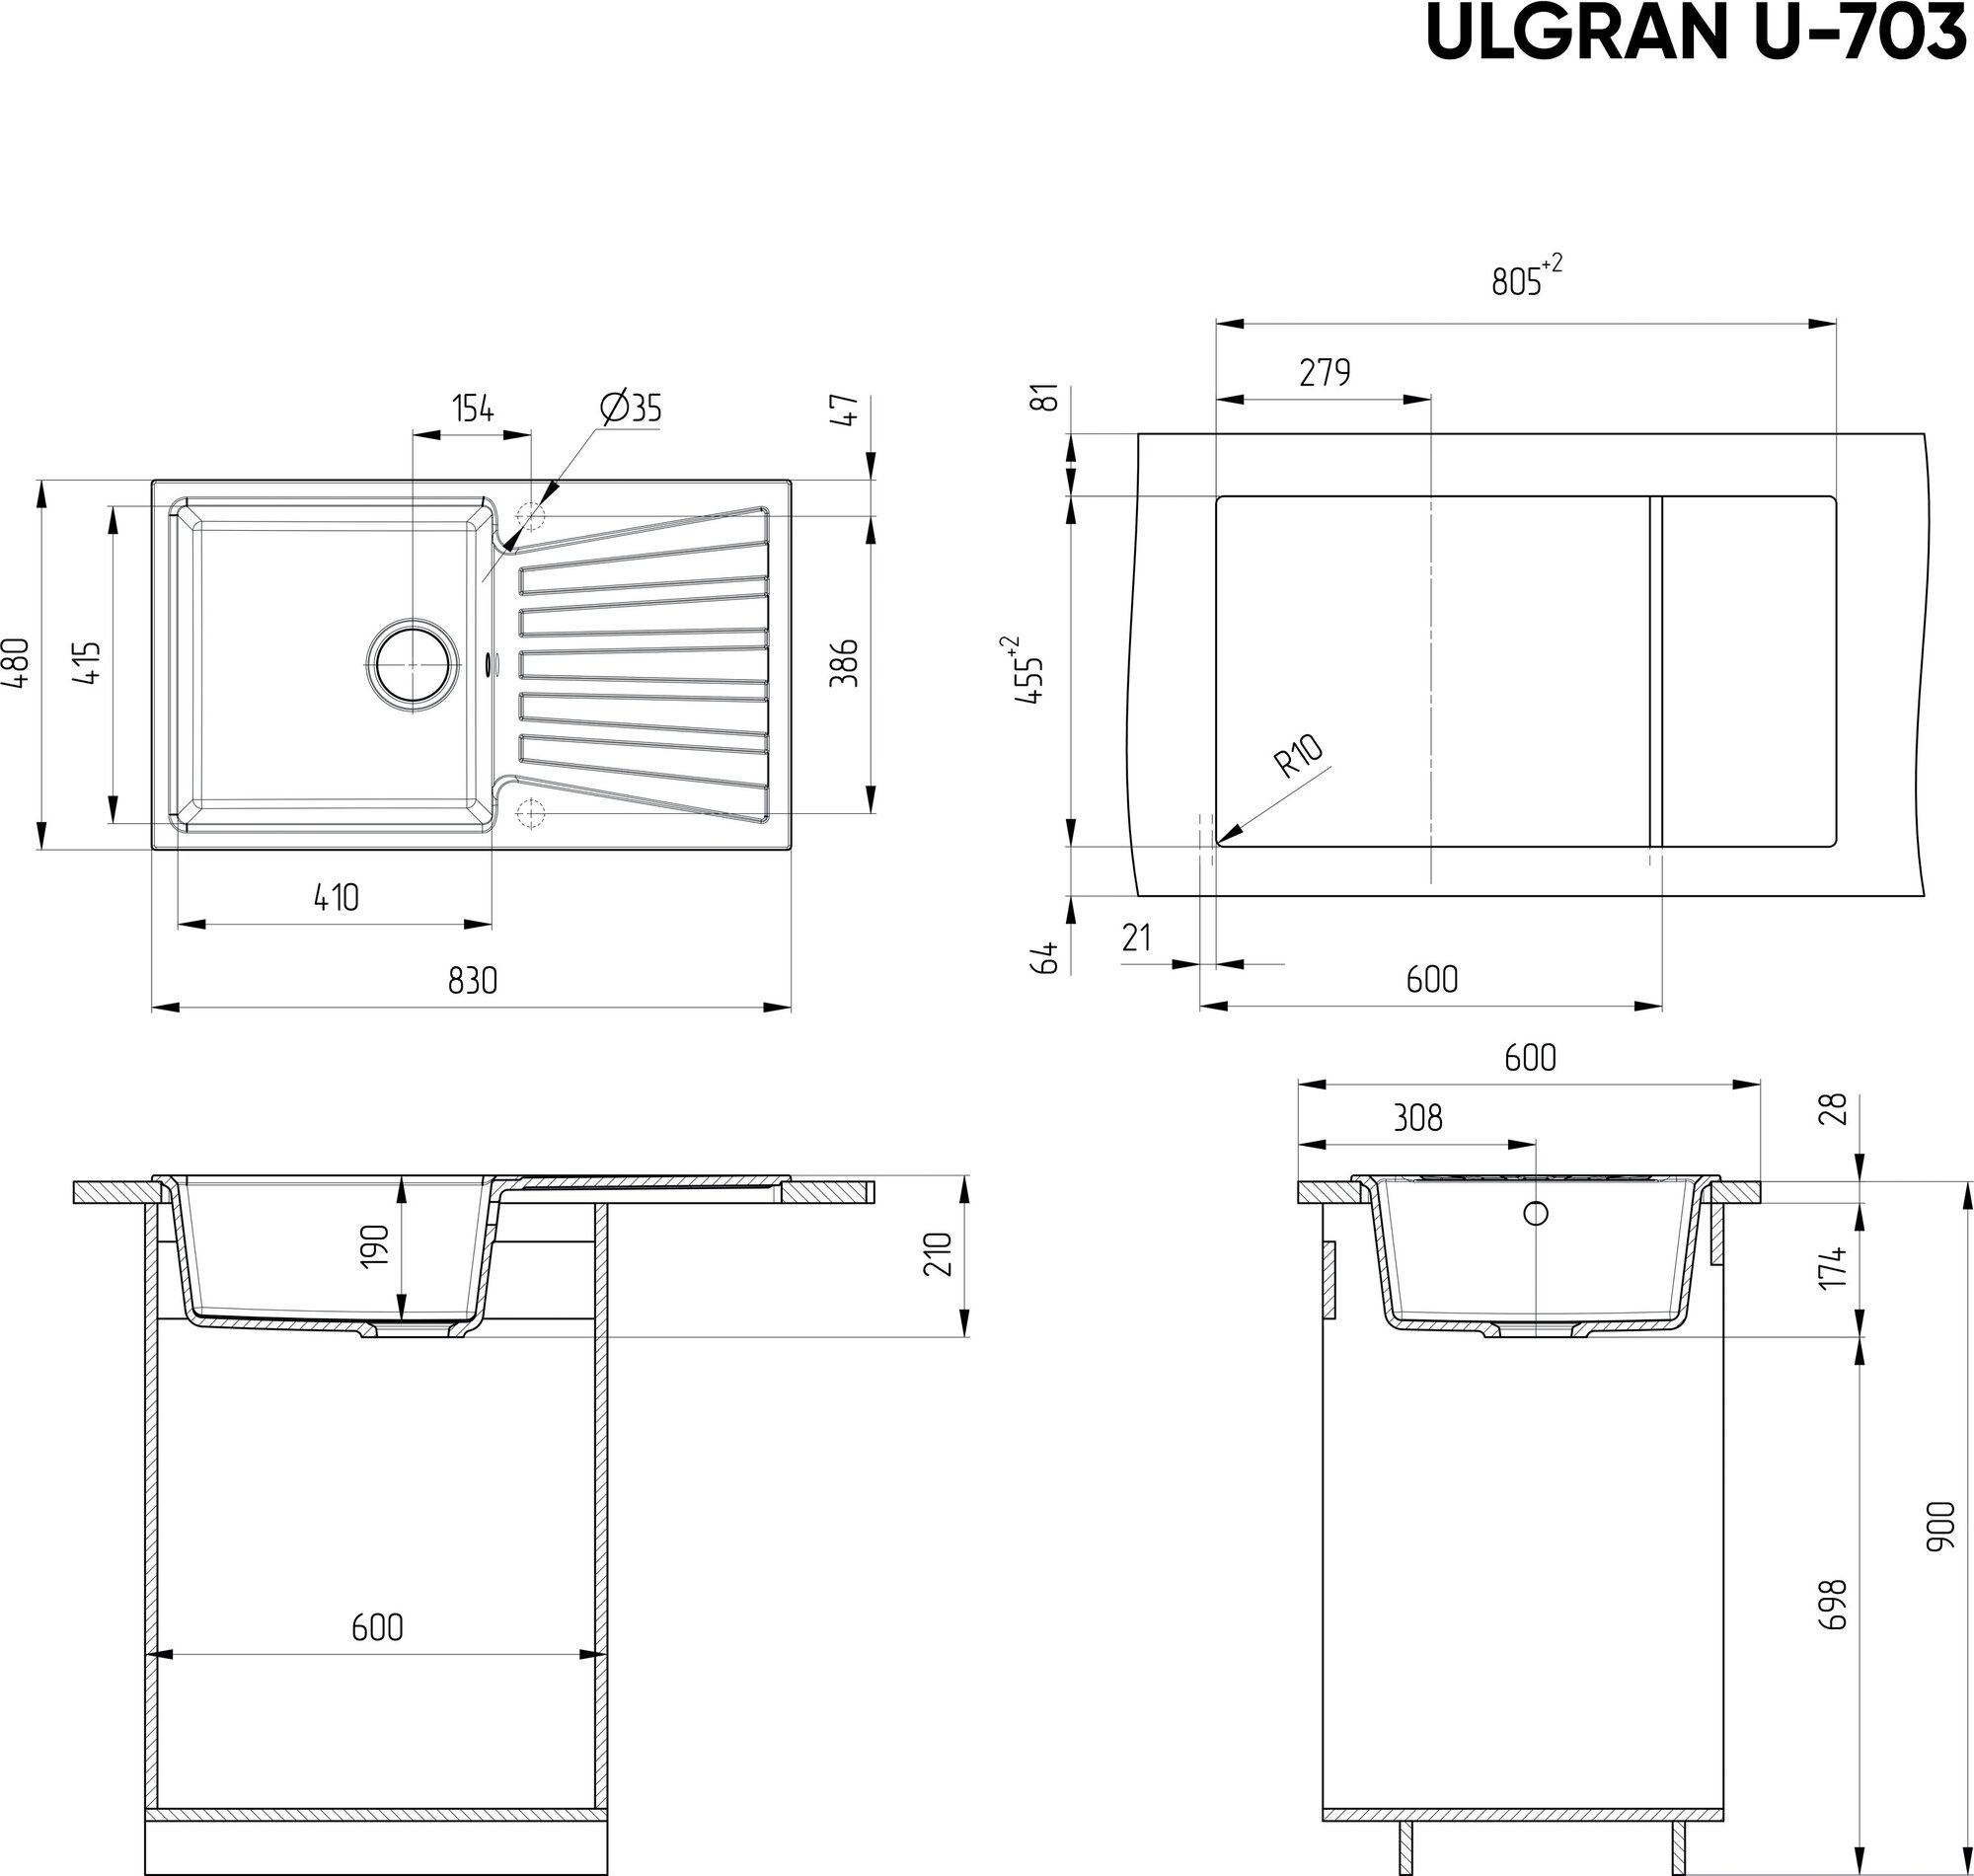 Кухонная мойка Ulgran U-703-309 темно-серый